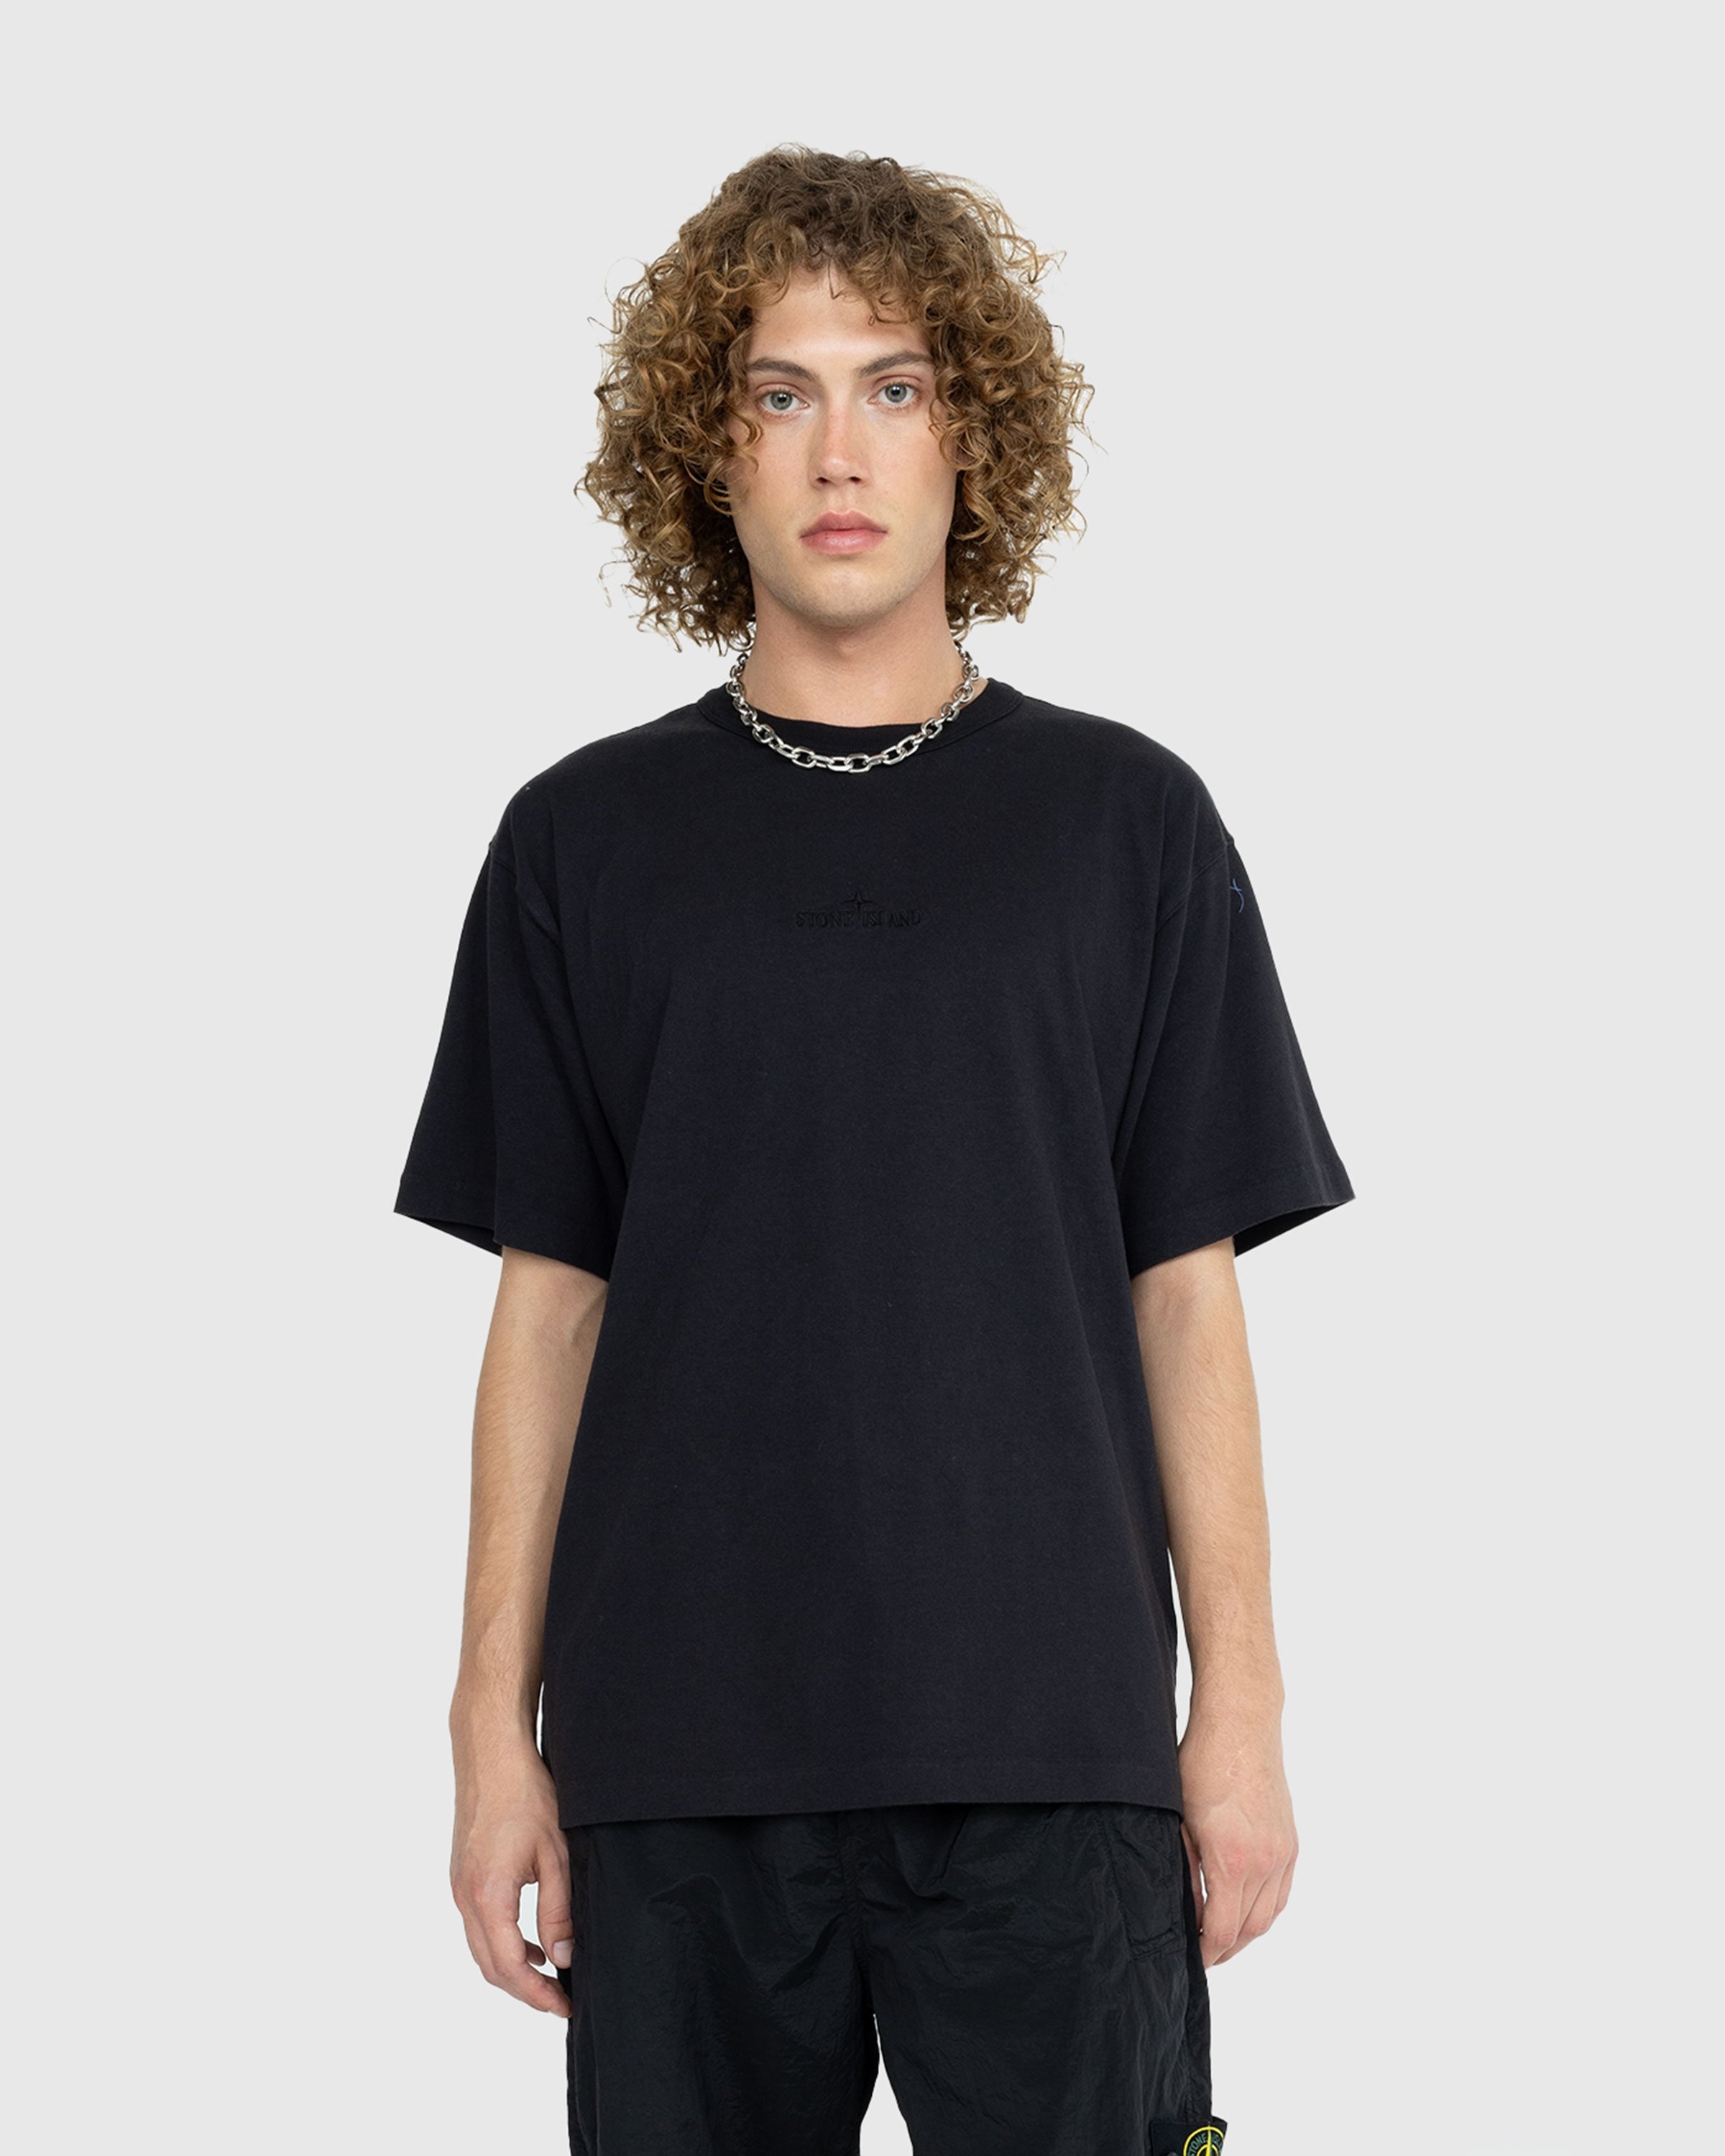 Stone Island – Highsnobiety T-Shirt Logo Garment-Dyed Black Shop 